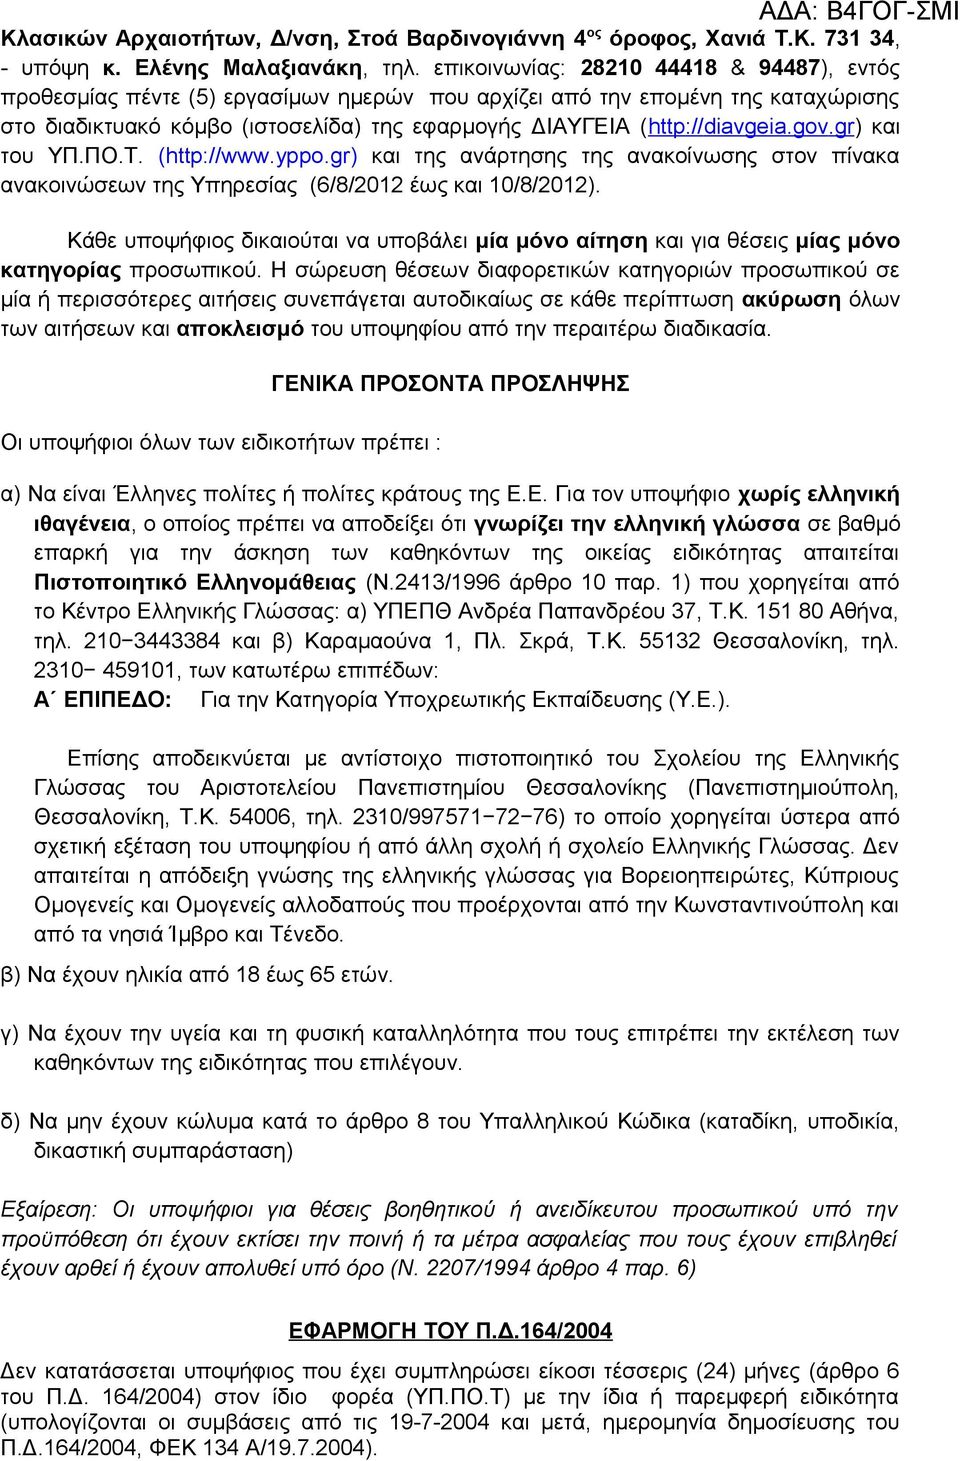 gov.gr) και του ΥΠ.ΠΟ.Τ. (http://www.yppo.gr) και της ανάρτησης της ανακοίνωσης στον πίνακα ανακοινώσεων της Υπηρεσίας (6/8/2012 έως και 10/8/2012).